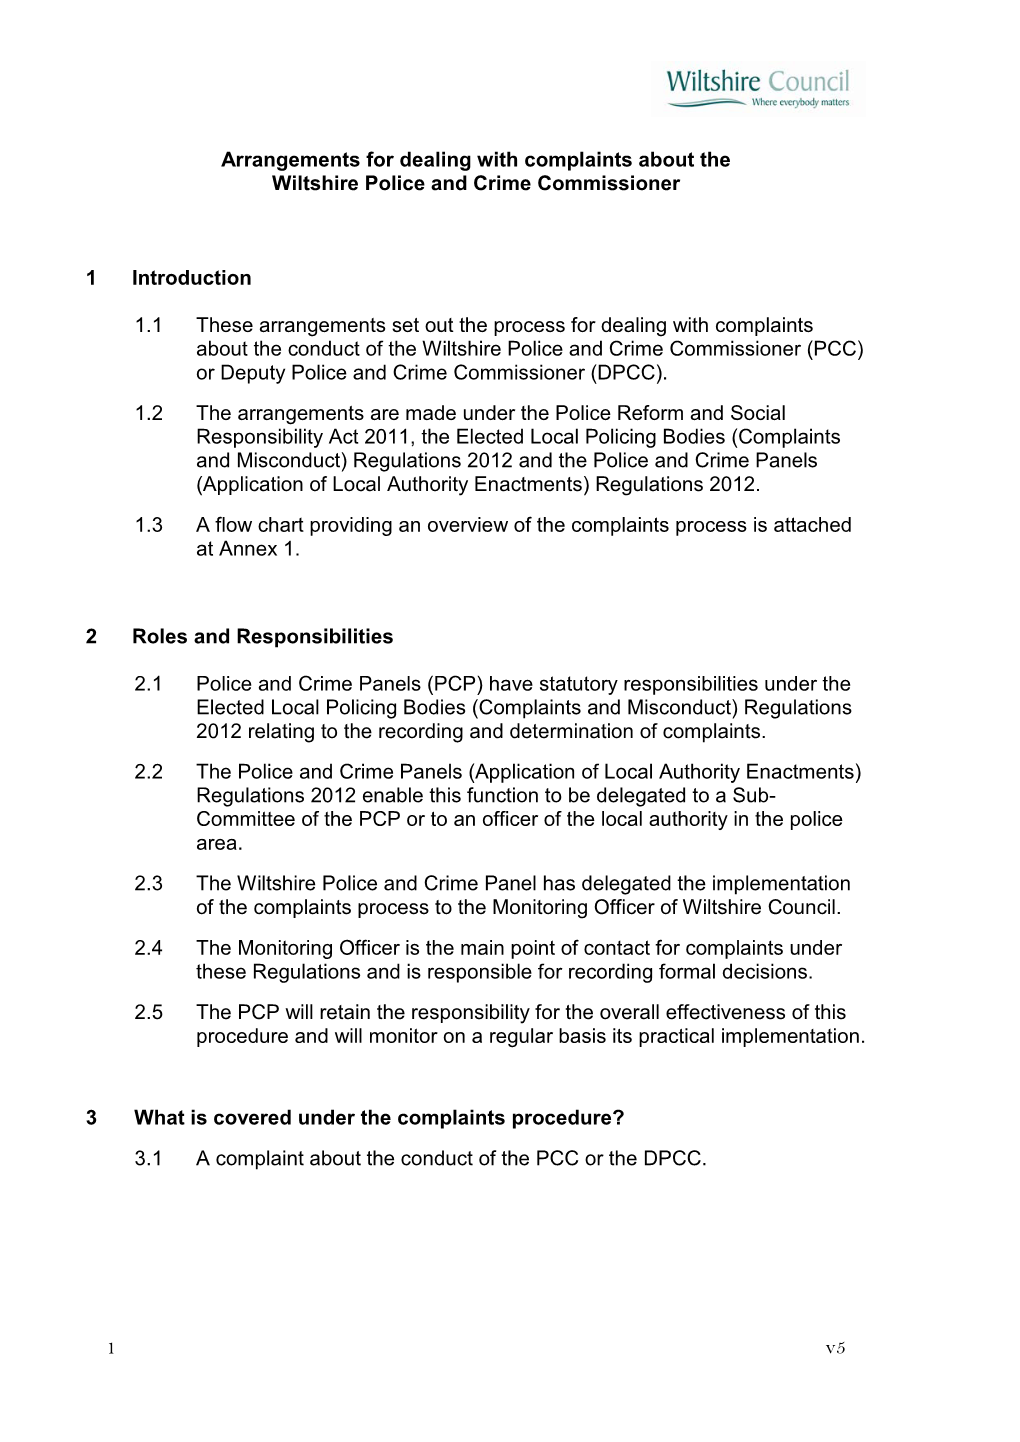 Arrangements for Dealing with Complaints About the Pcc and Dpcc